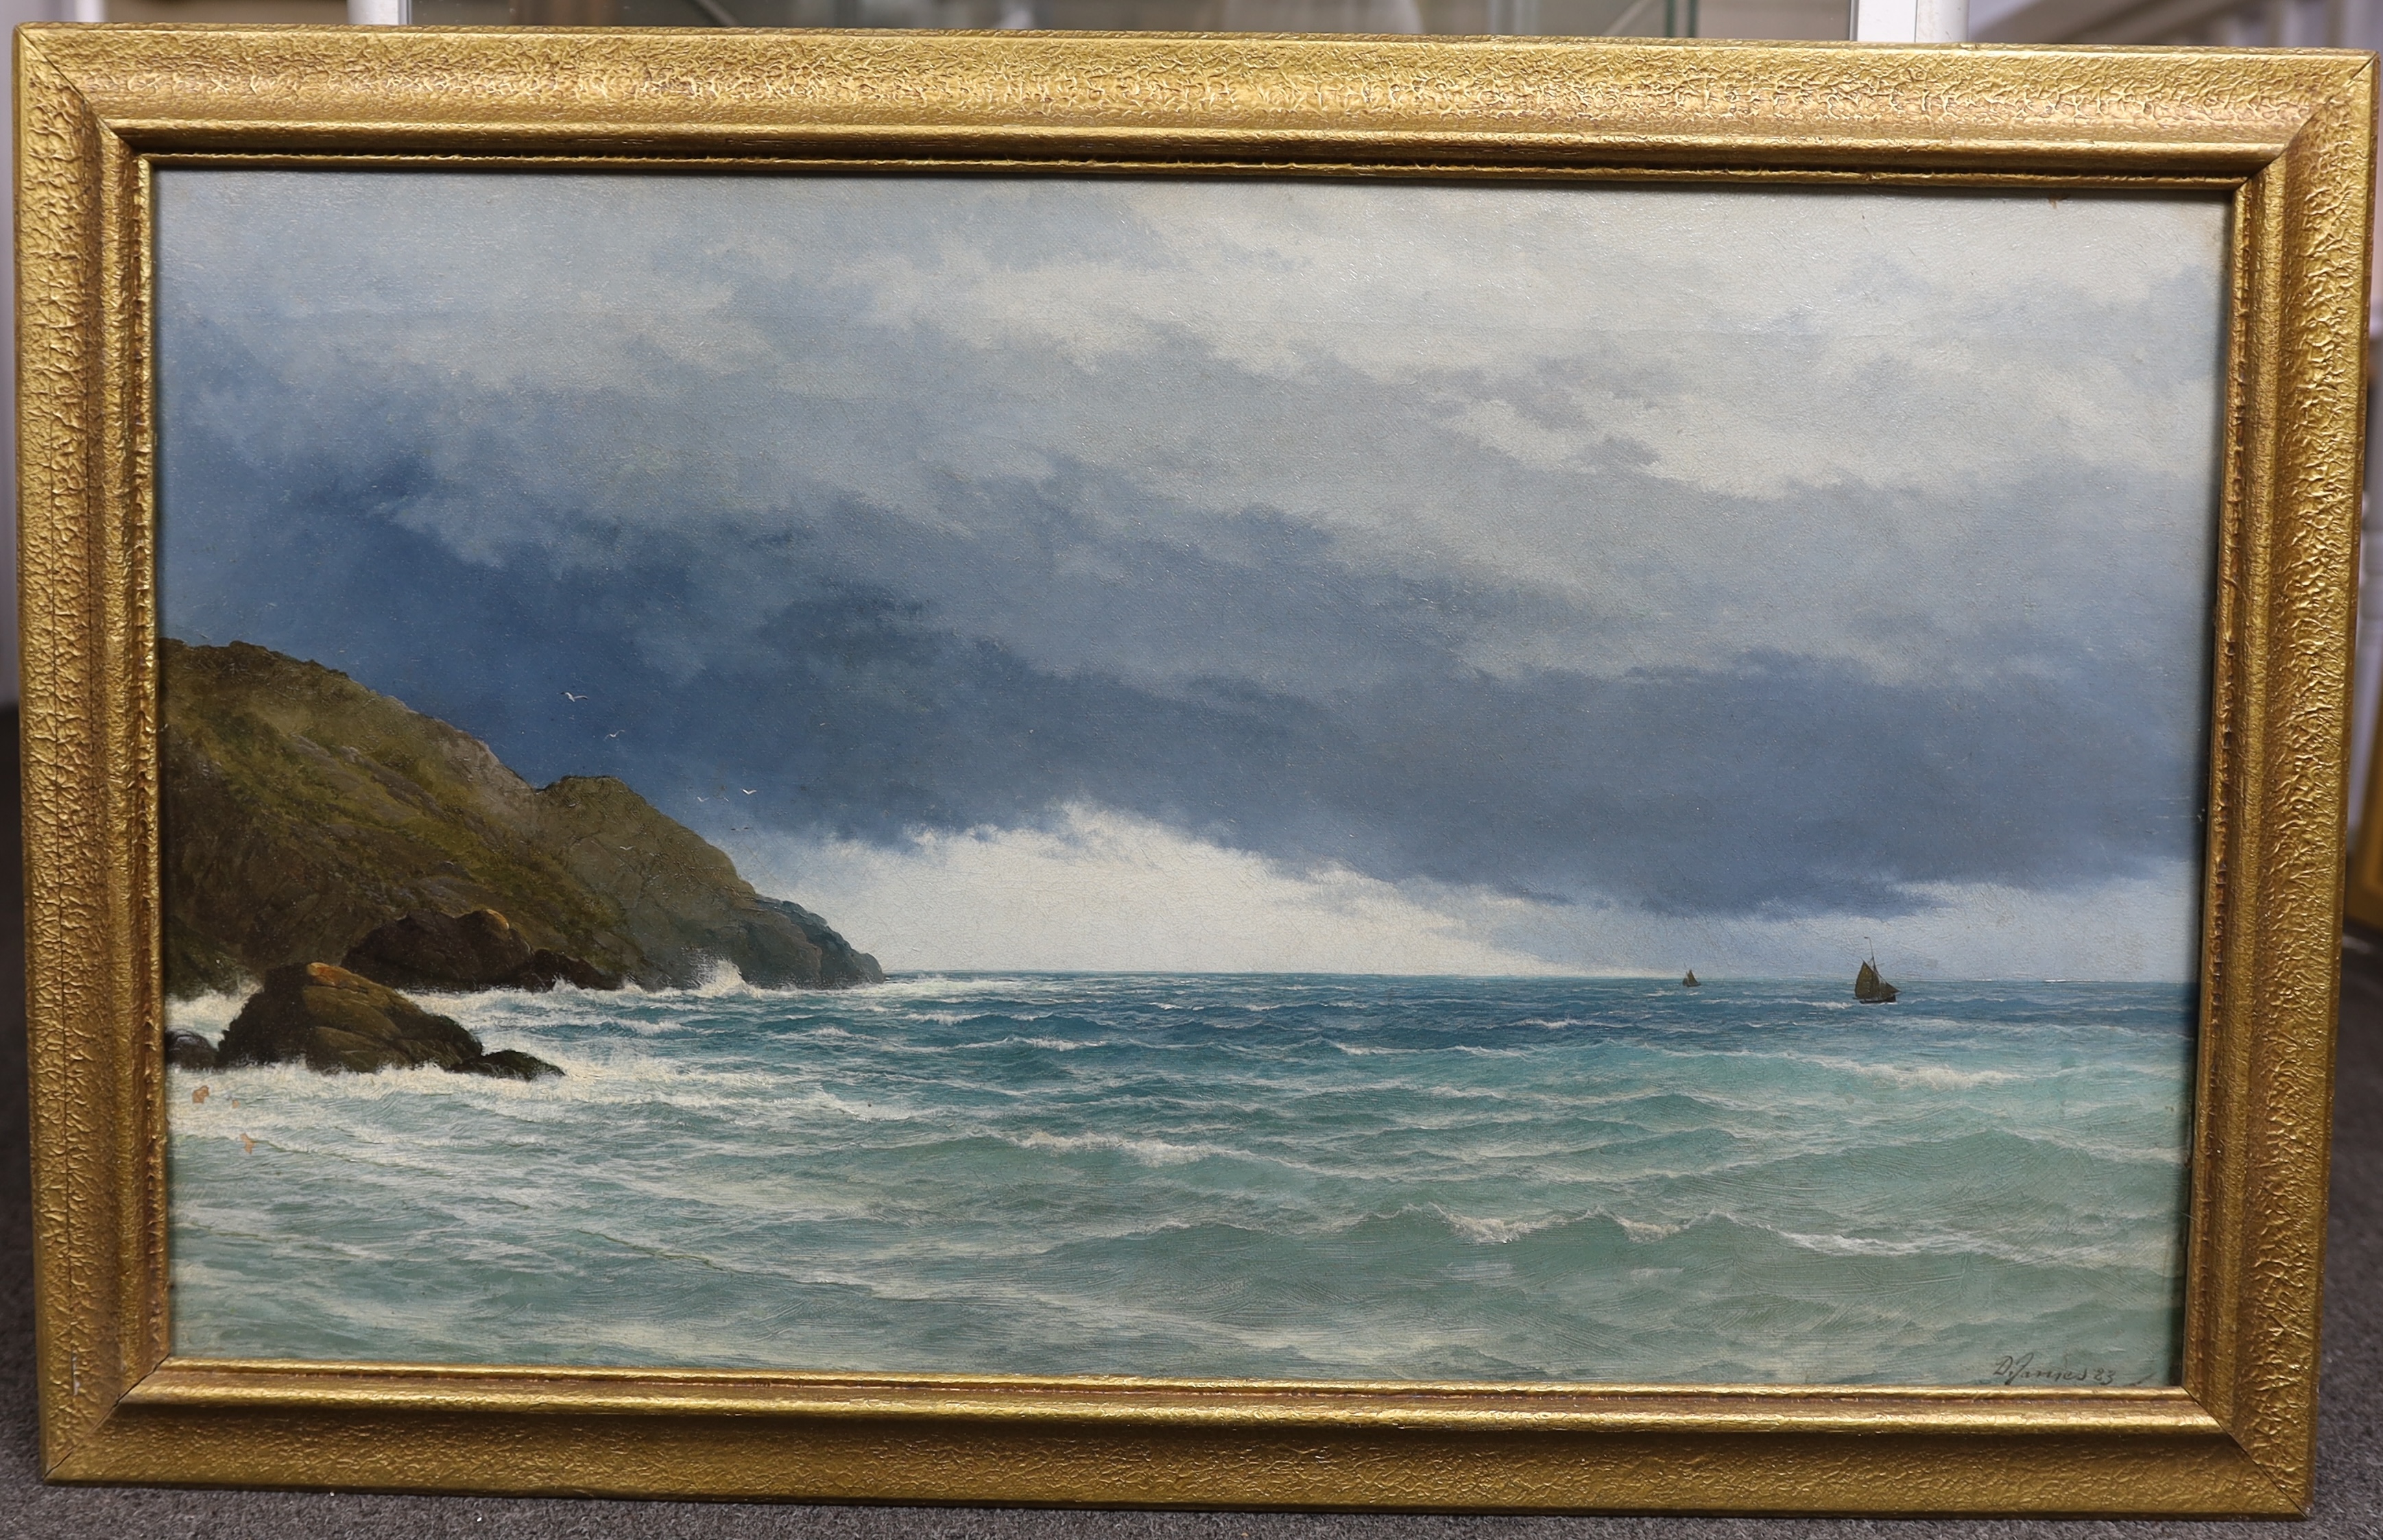 David James (British, 1853-1904), Shipping off the coast, oil on canvas, 74.5 x 43.5cm